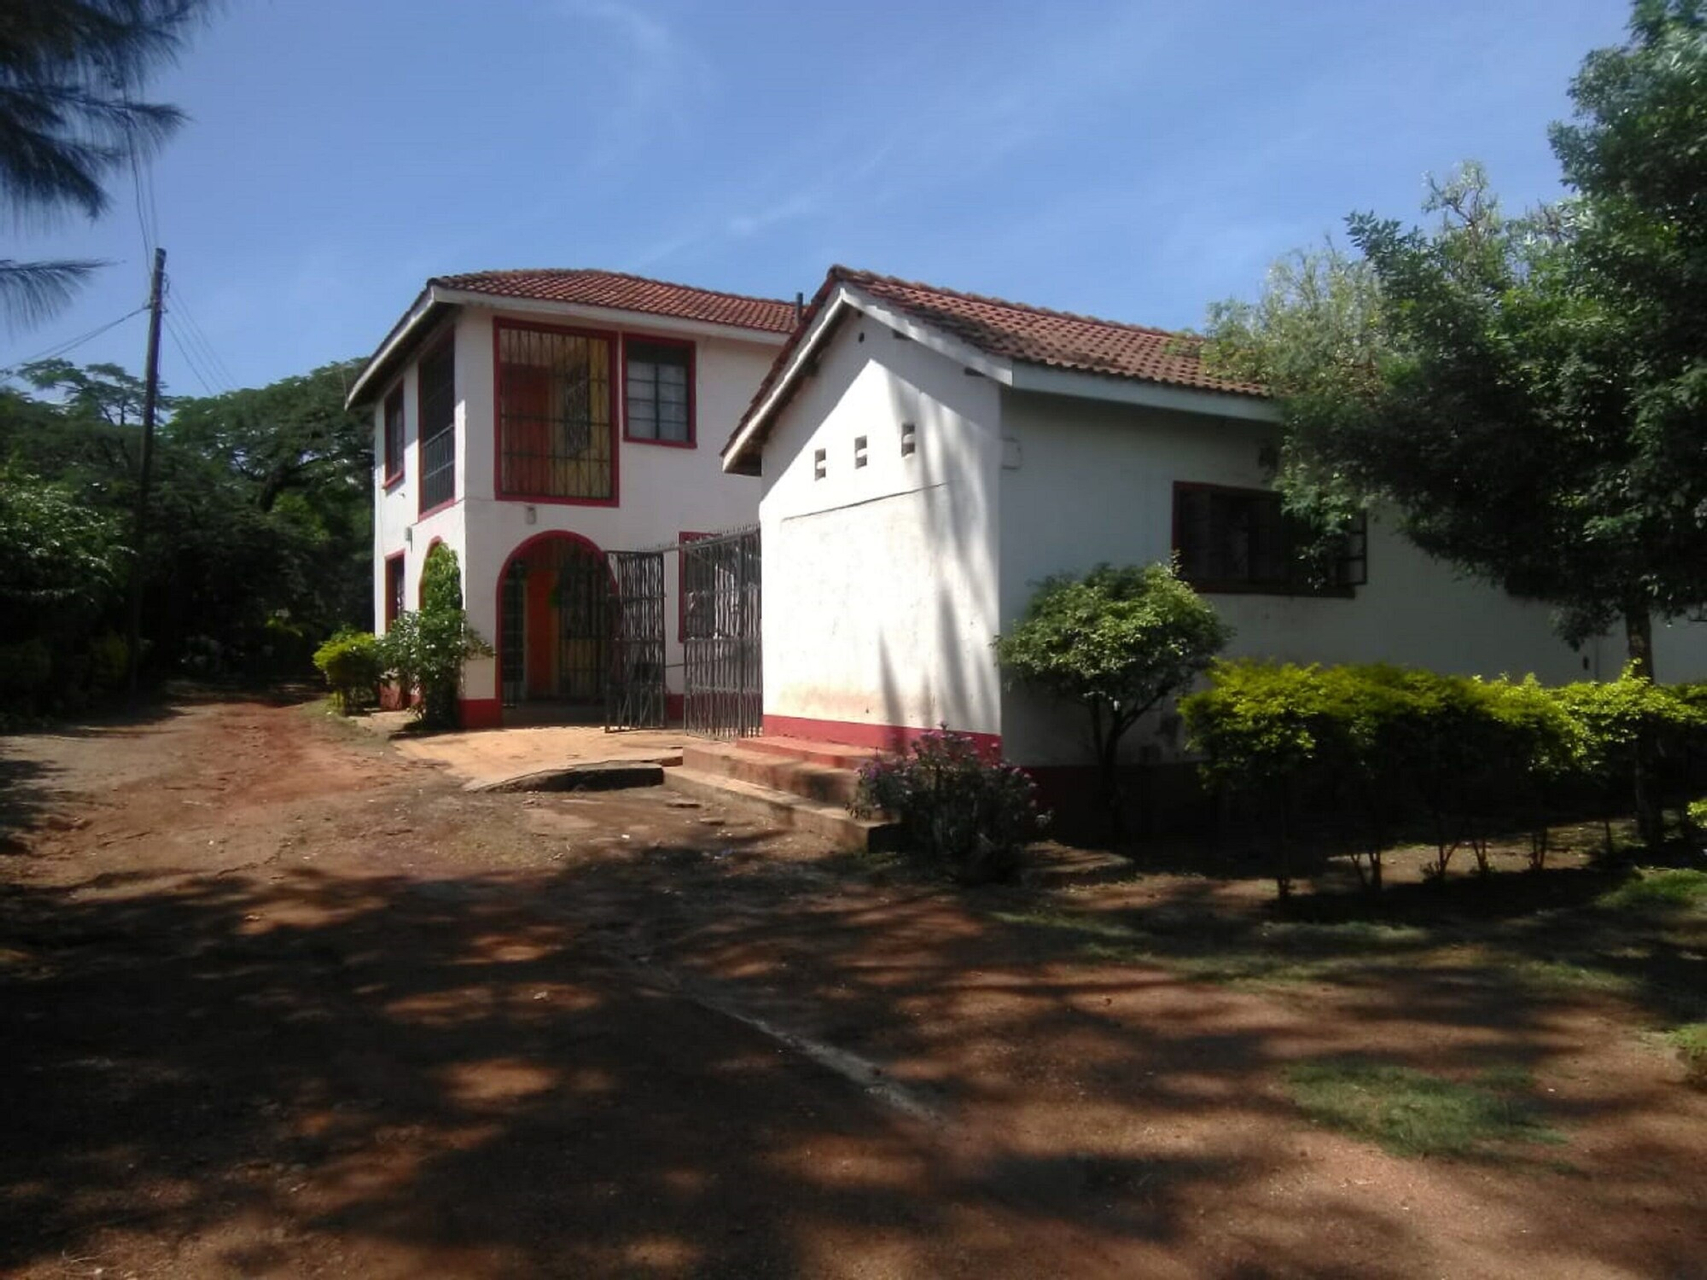 Primary image, Robert's Village Inn, Kisumu Central